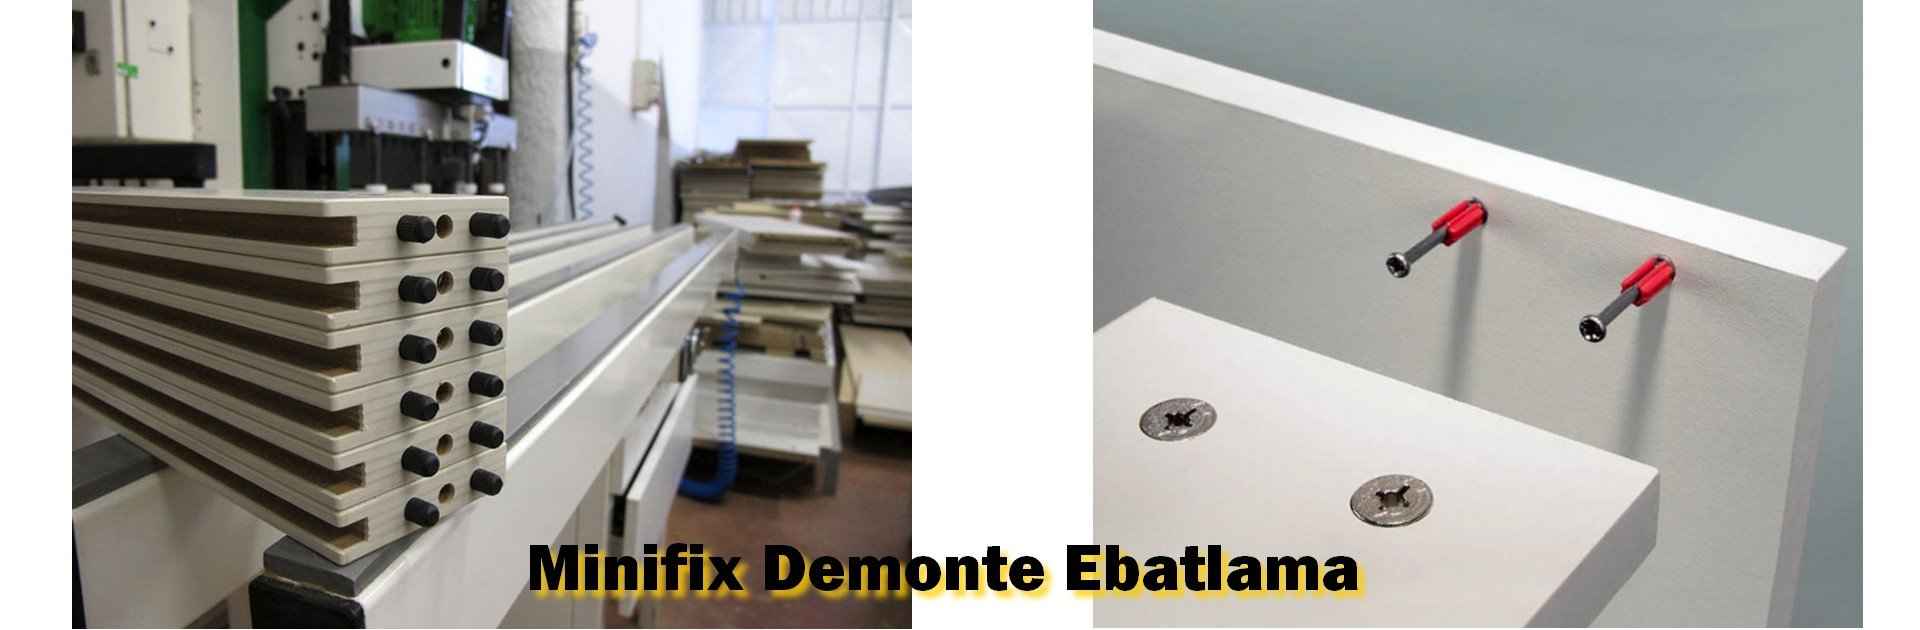 Minifix Demonte Ebatlama